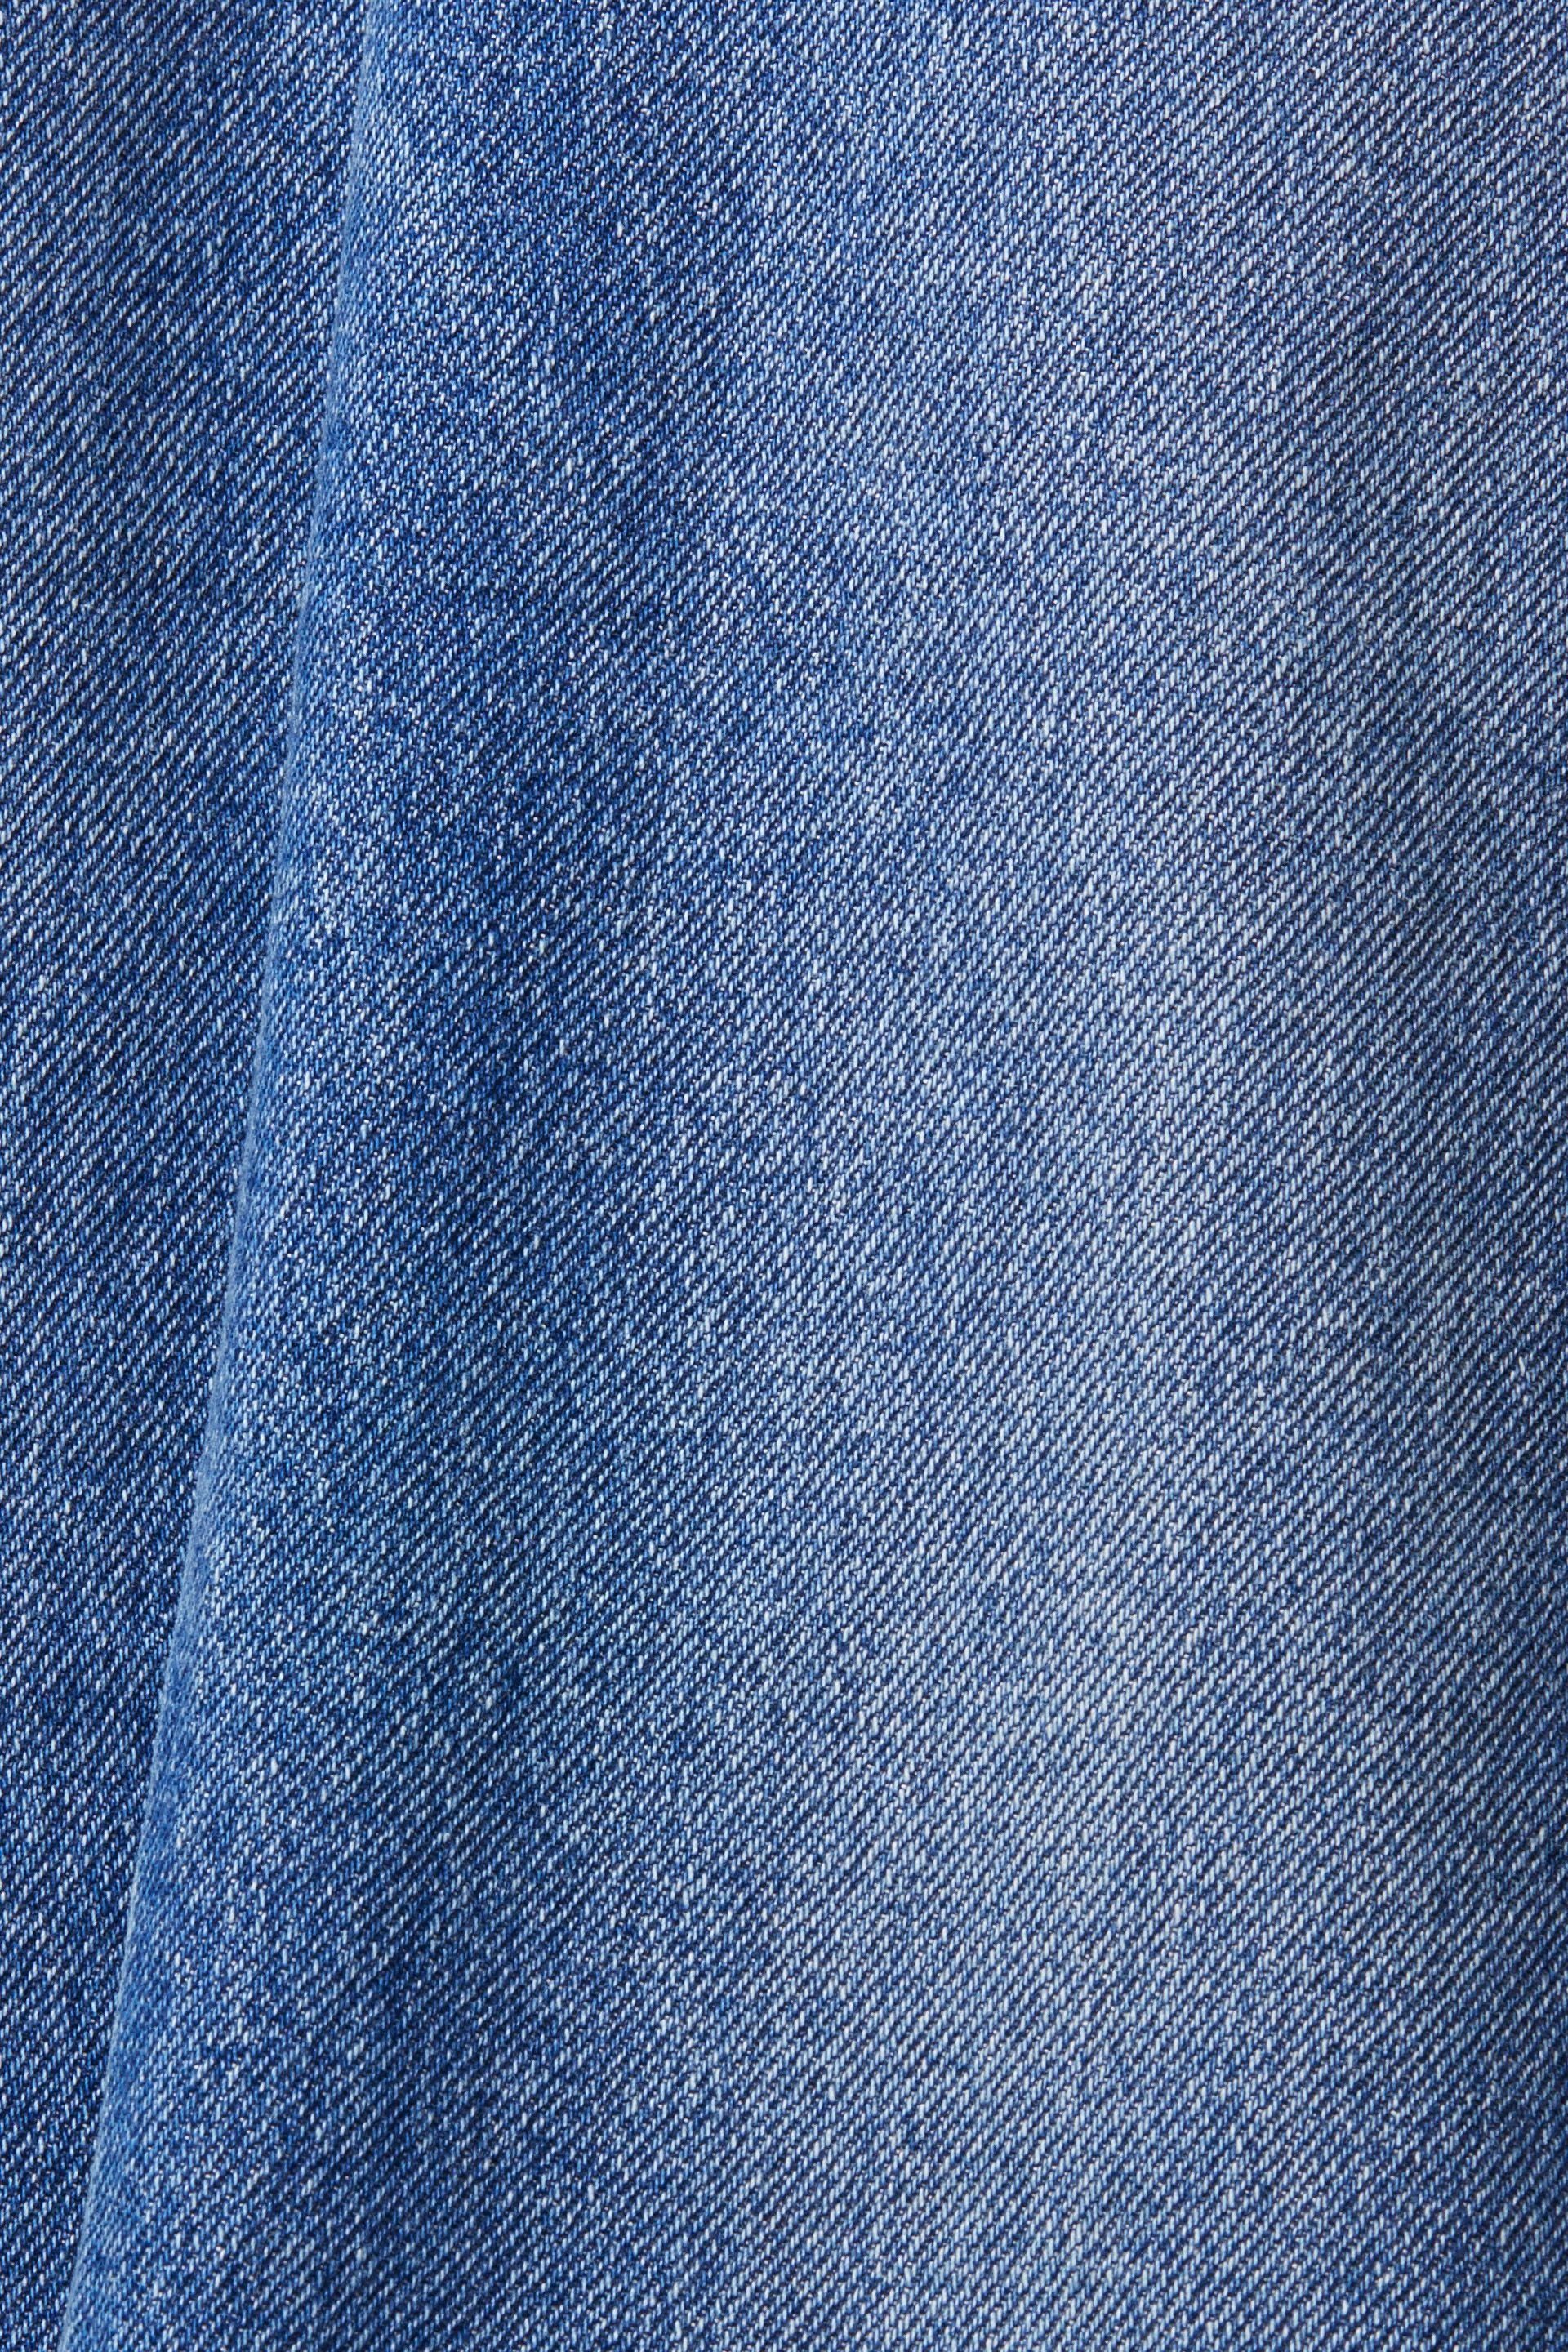 5-Pocket-Jeans Esprit